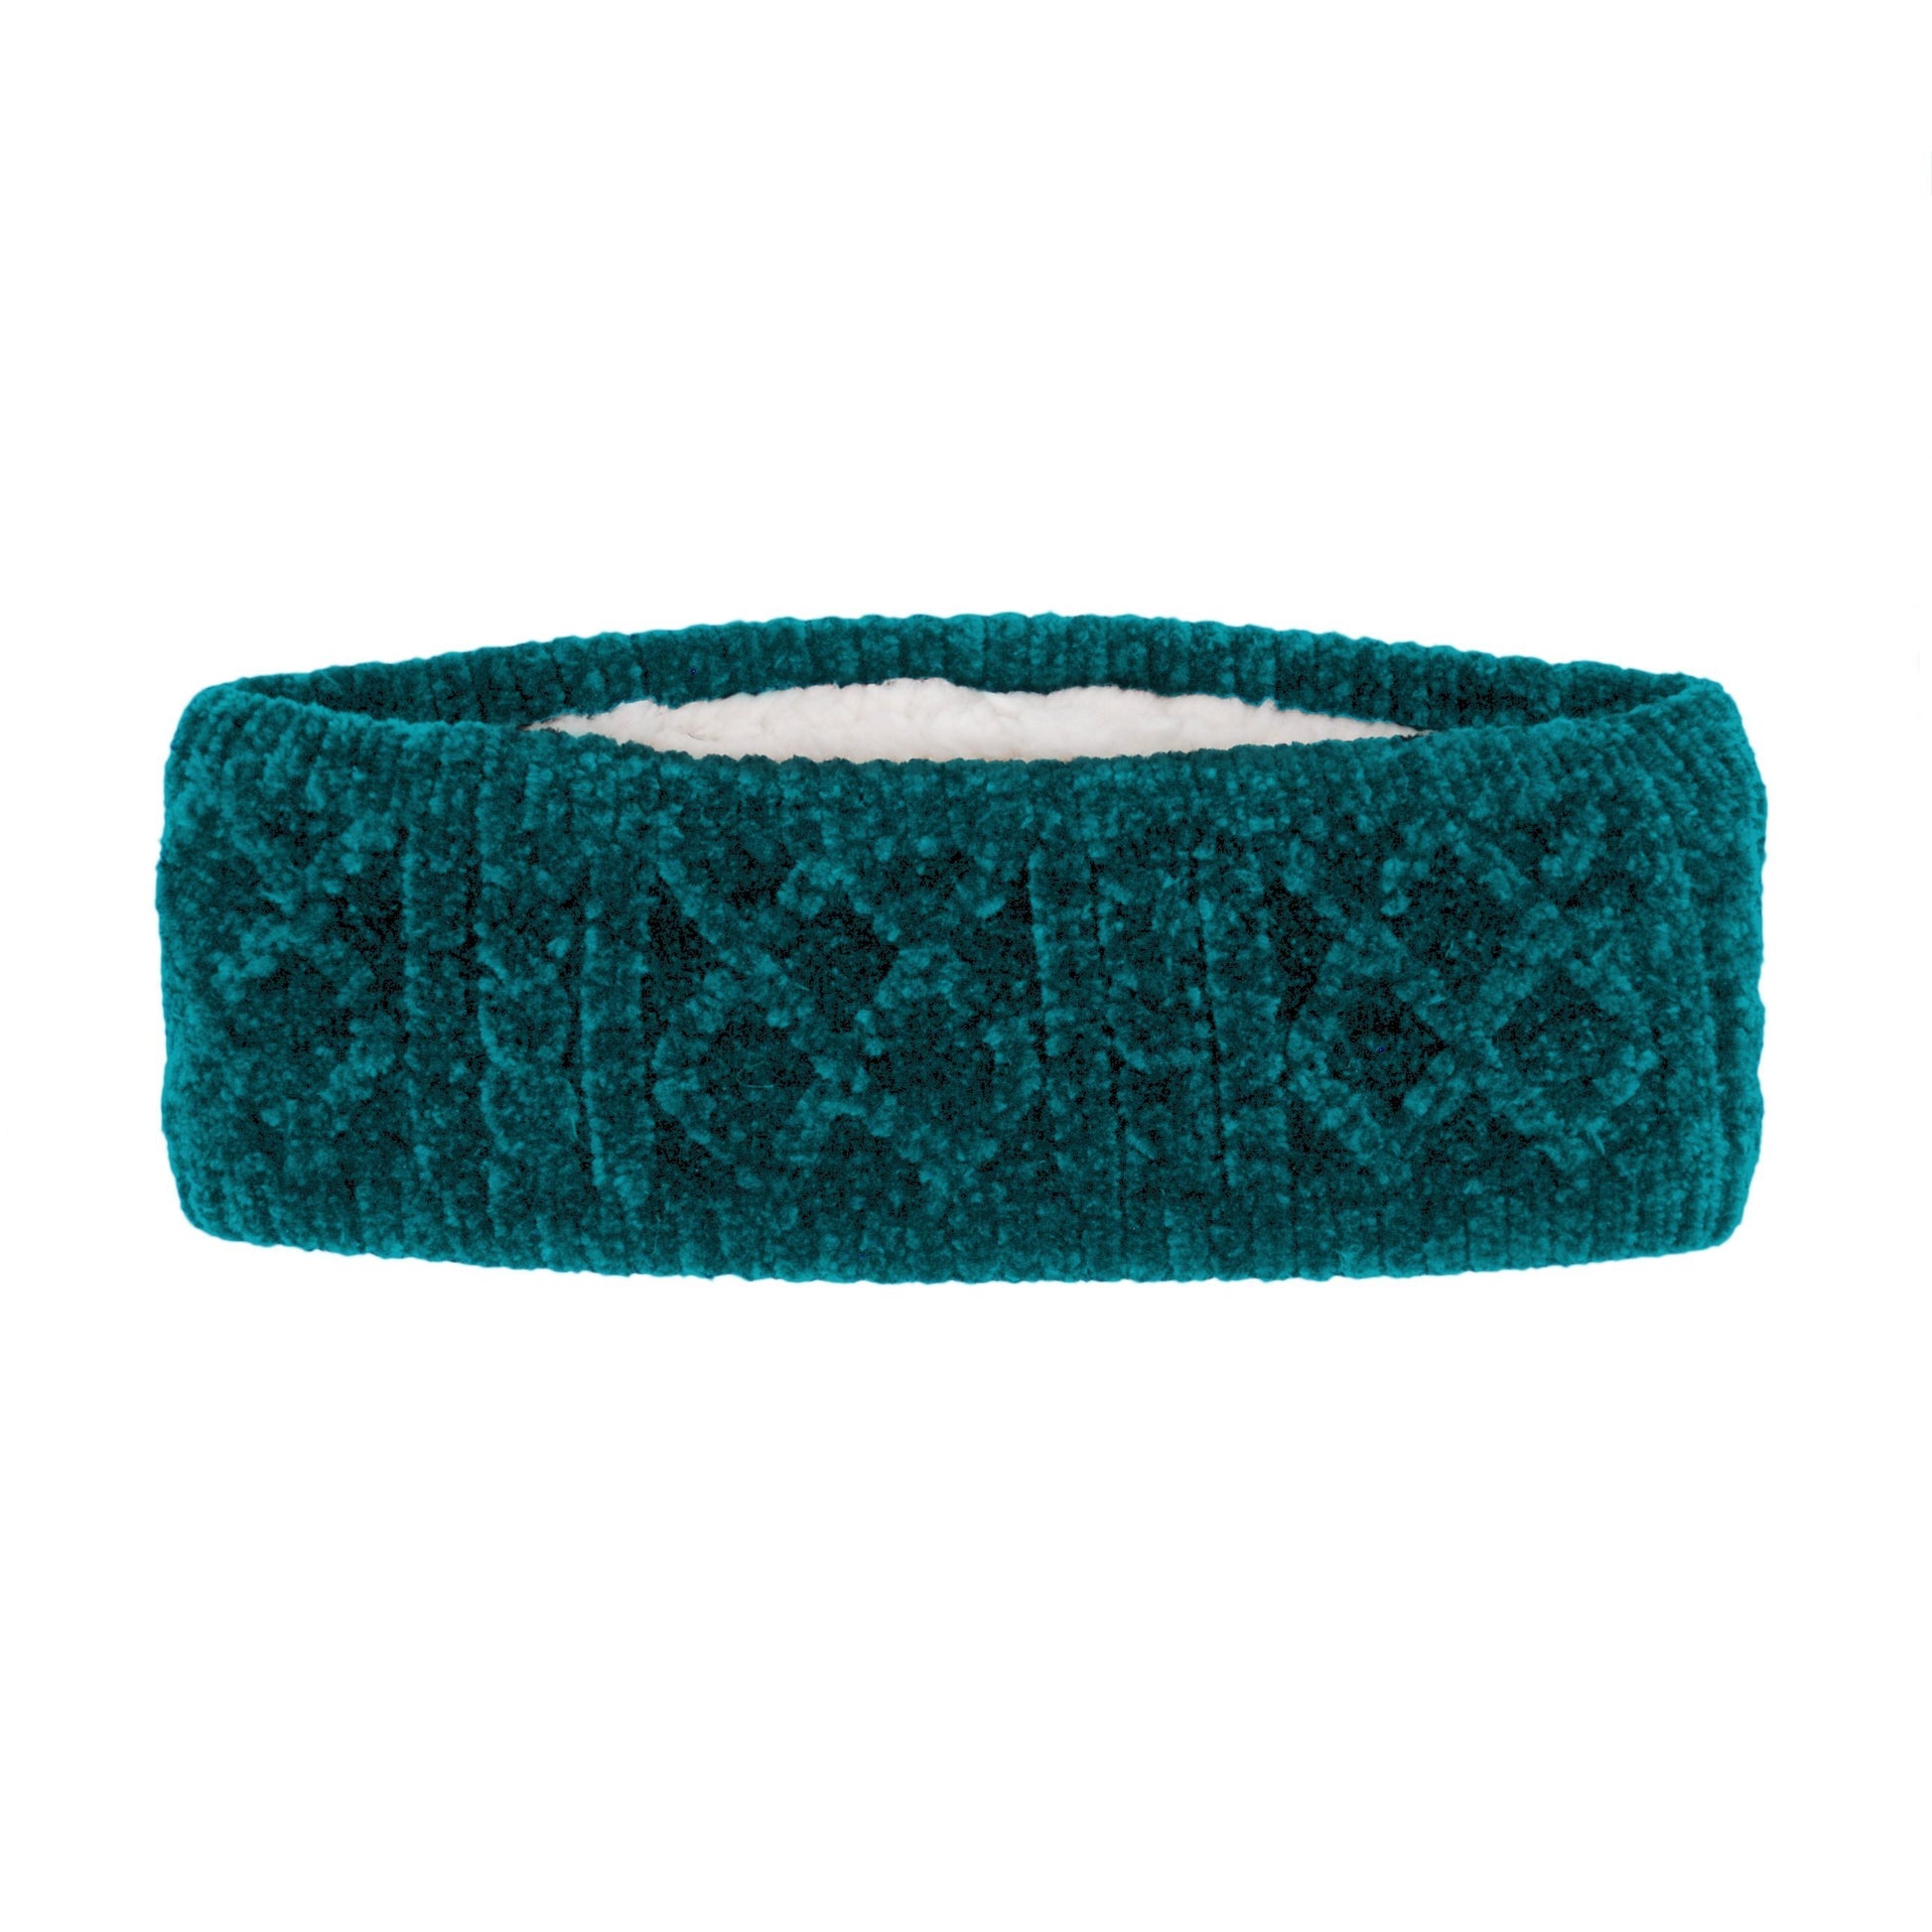 Pudus Harbor Teal Chenille Cable Knit Headband for Women - Ear Warmer, Winter Headband with Warm Faux Fur Fleece